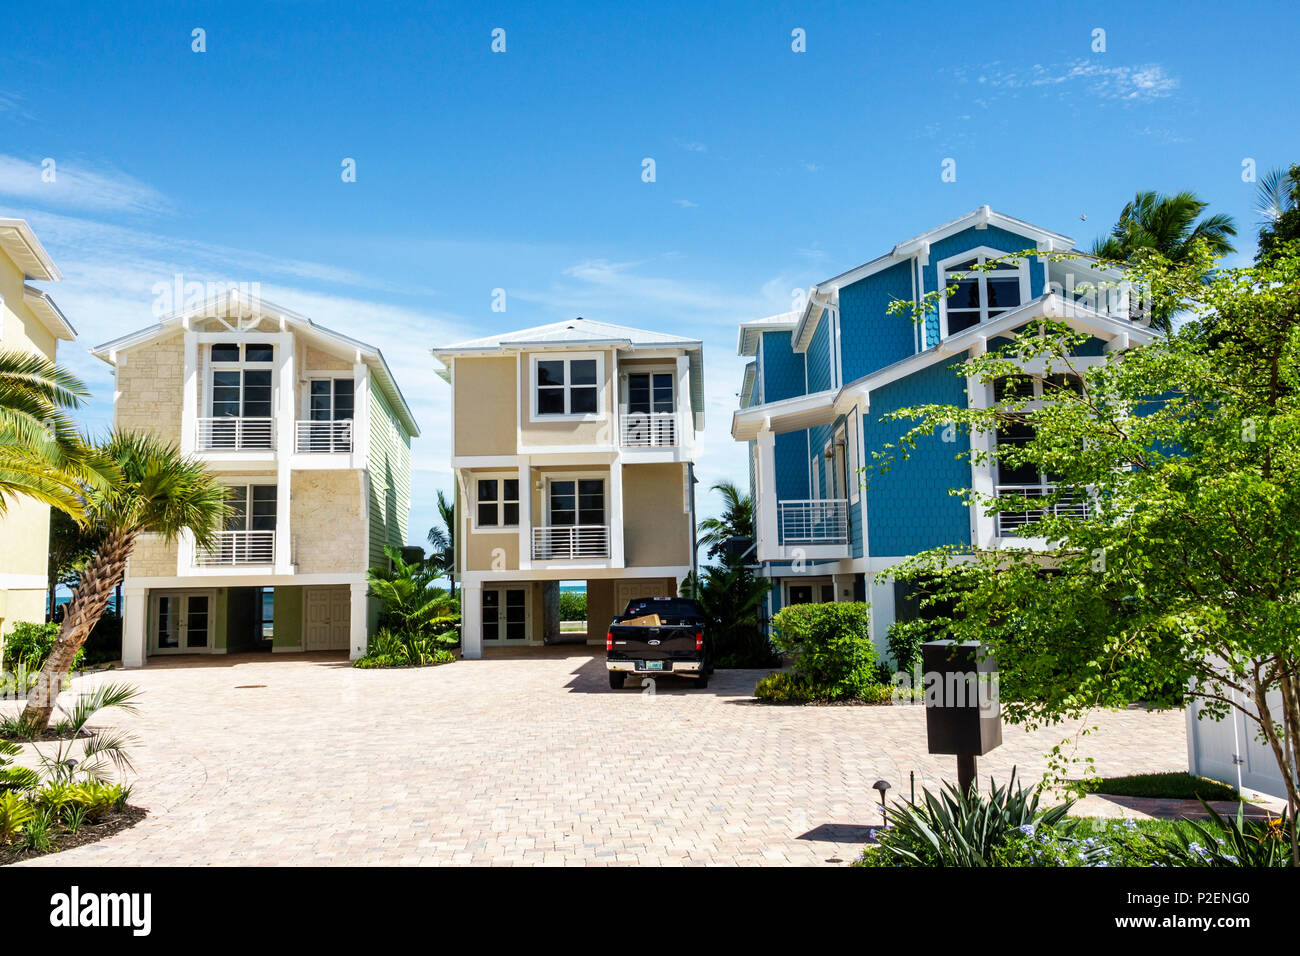 Florida Upper Florida Keys,Lower Matecumbe Key,Islamorada,Tarpon Point,vendita case nuove,residenze fronte oceano,gated community,immobiliare di lusso, Foto Stock